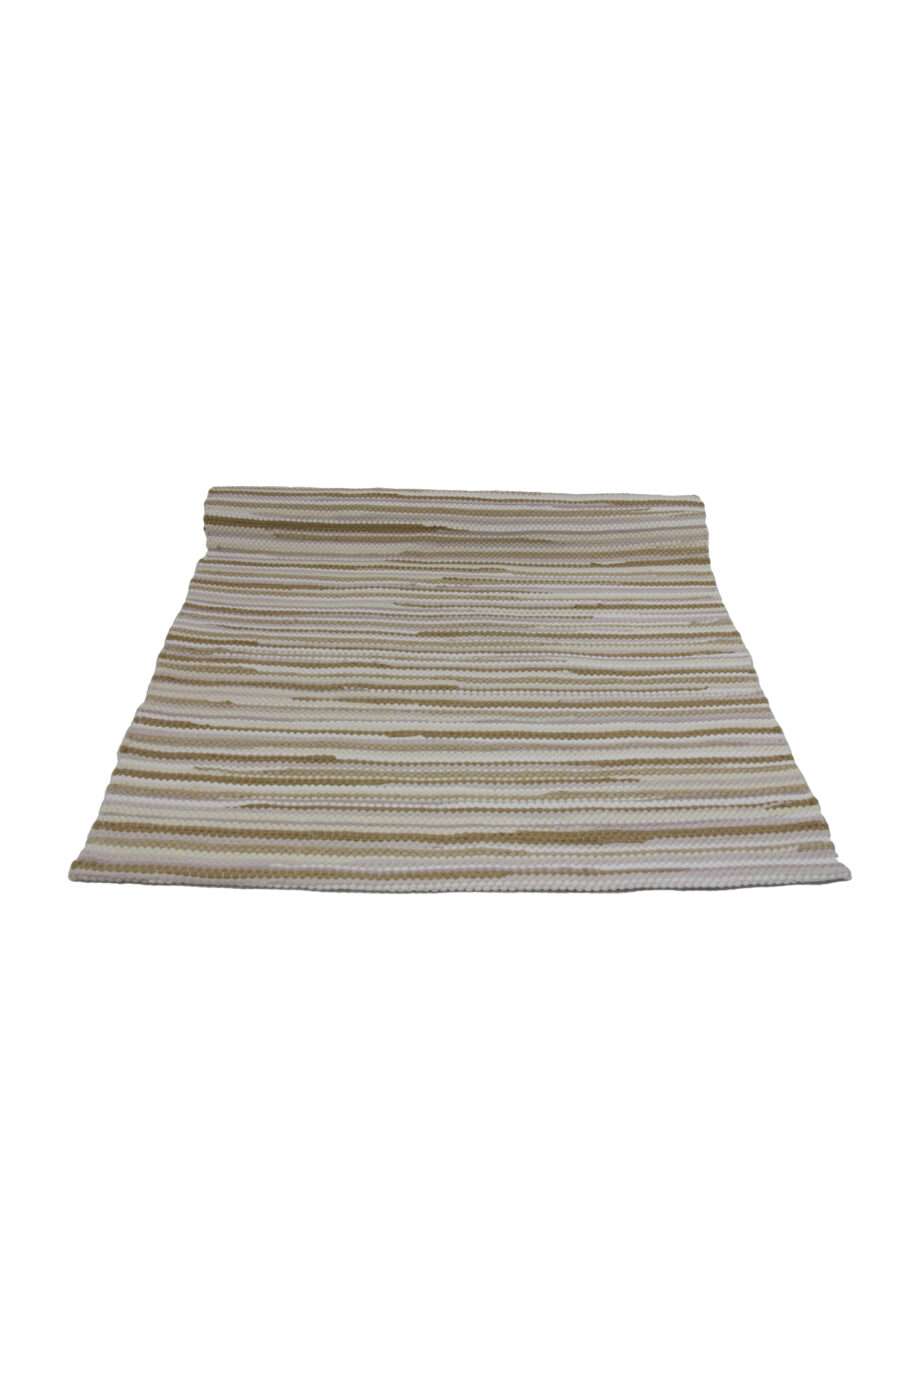 stripy linen woven cotton floor runner large